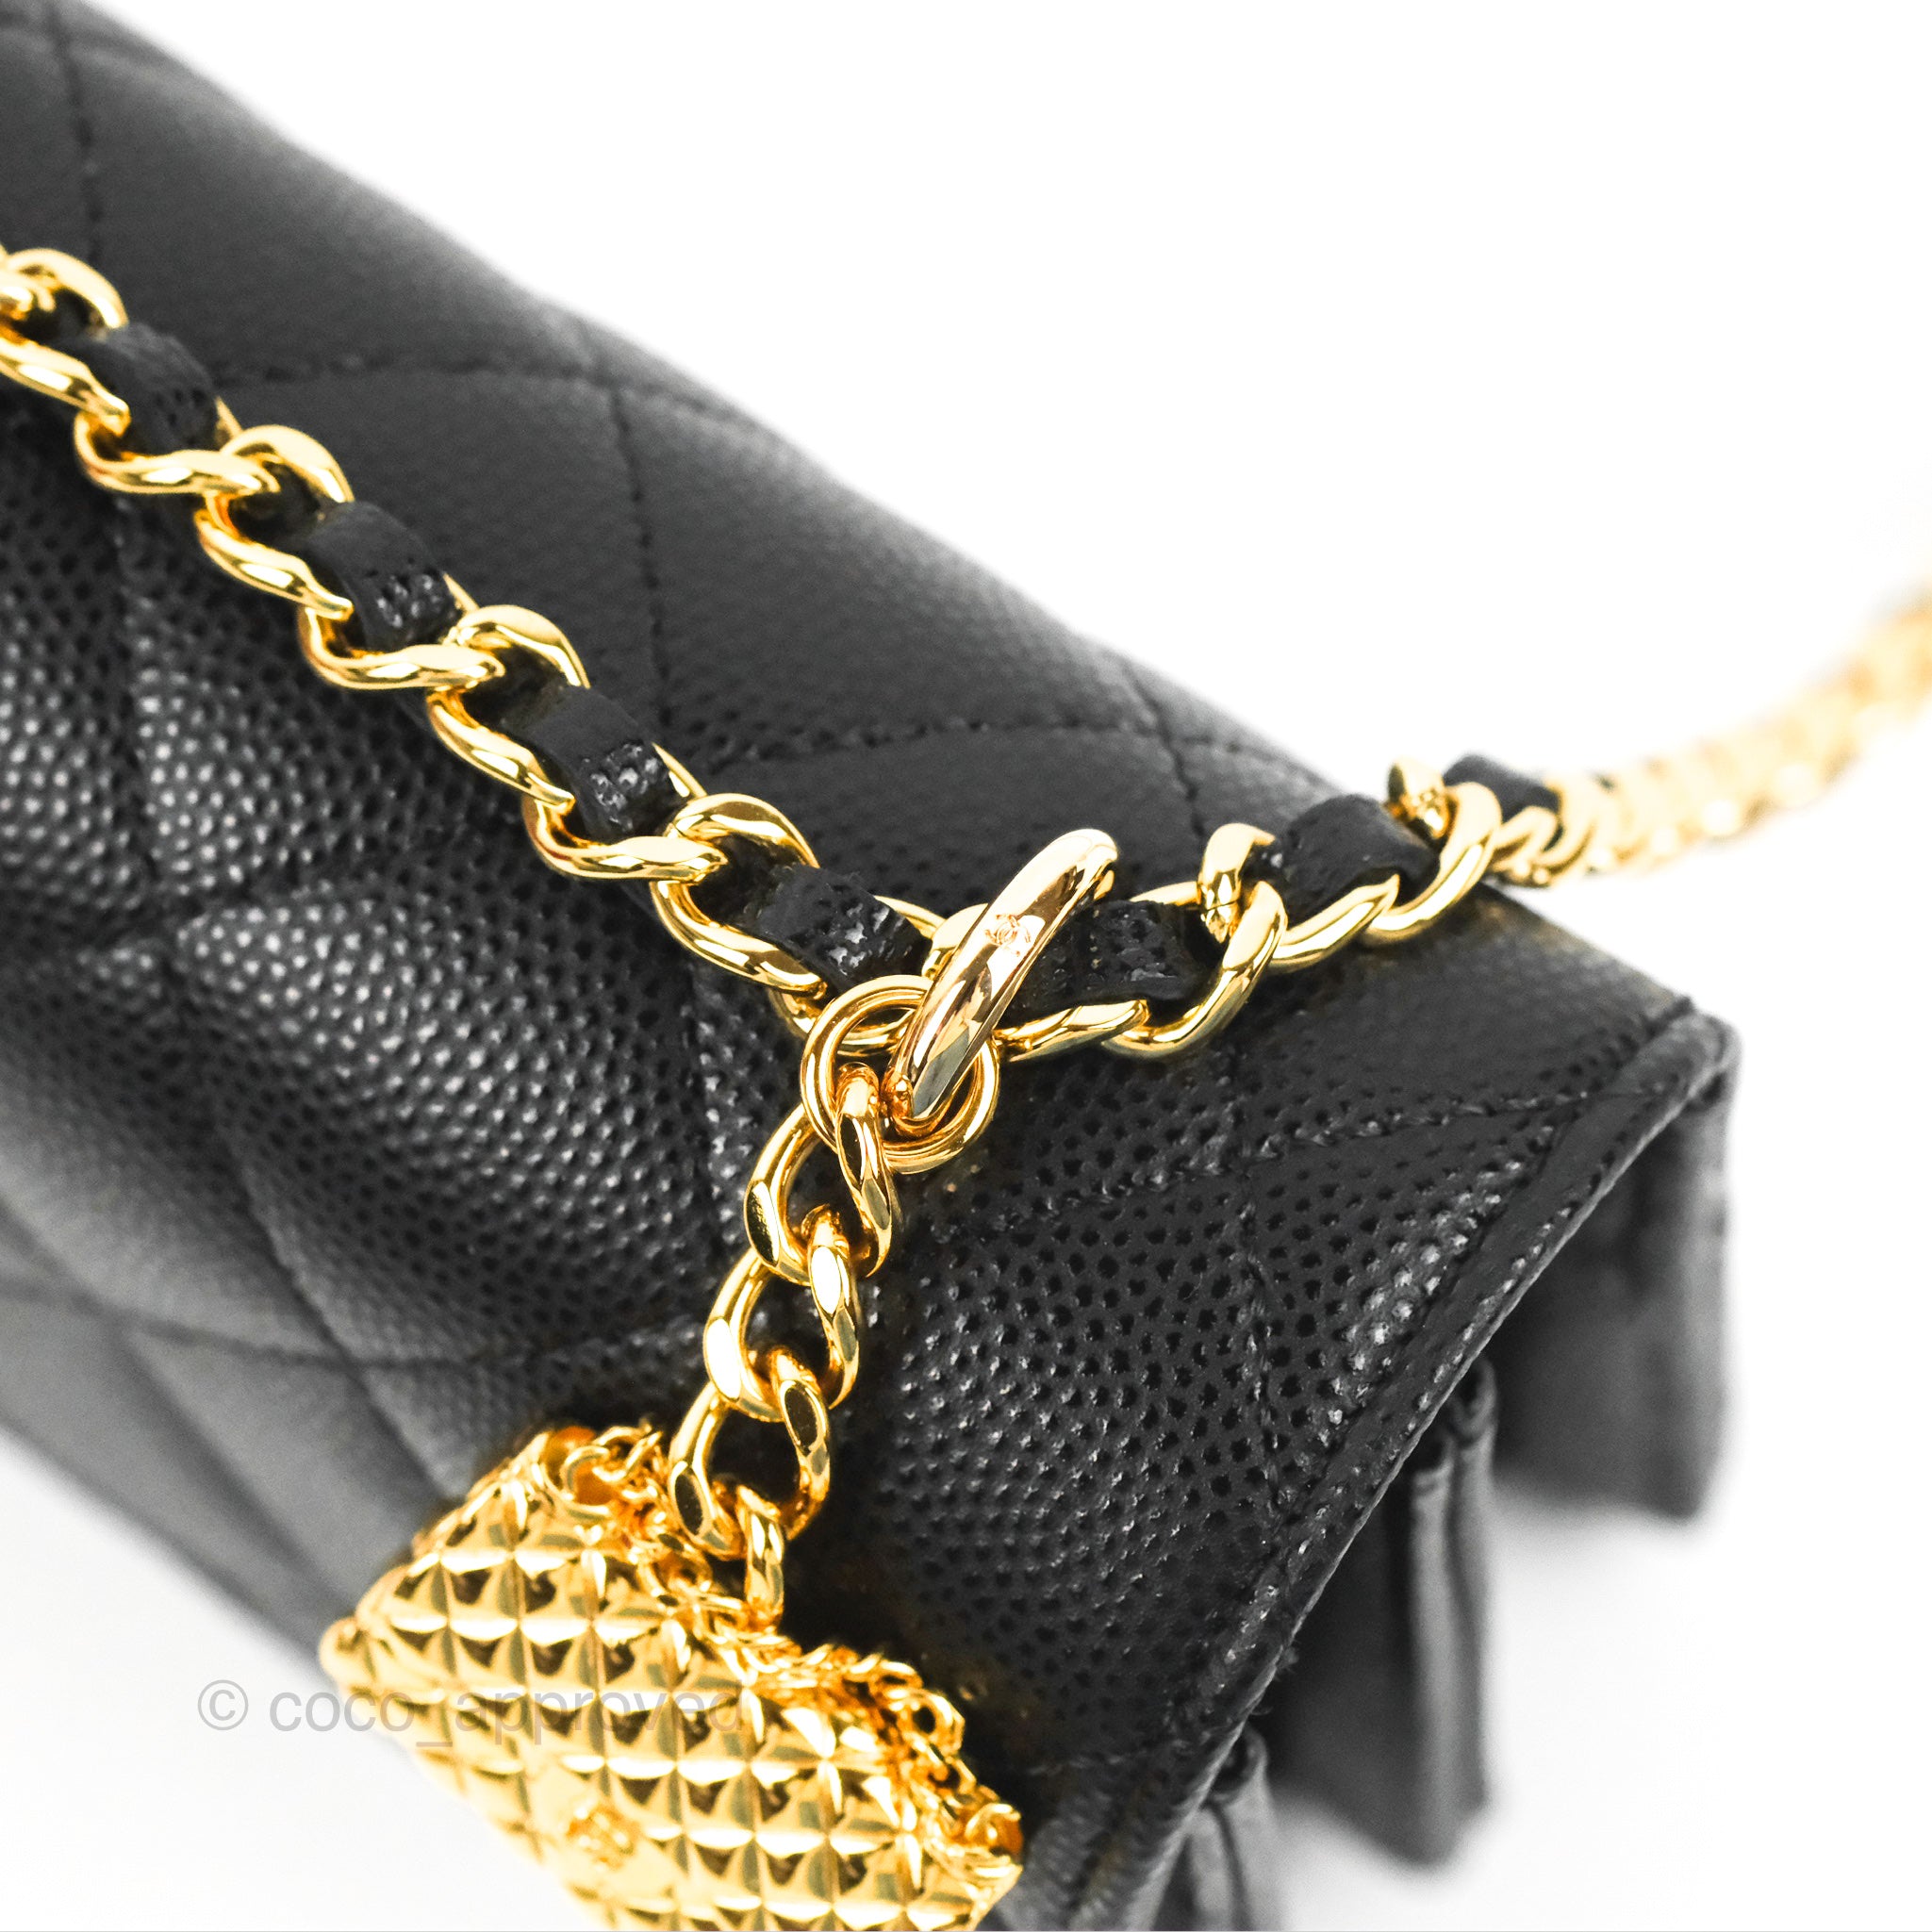 Louis Vuitton Envelope Card Holder Wallet Bag Charm W Box, Receipt